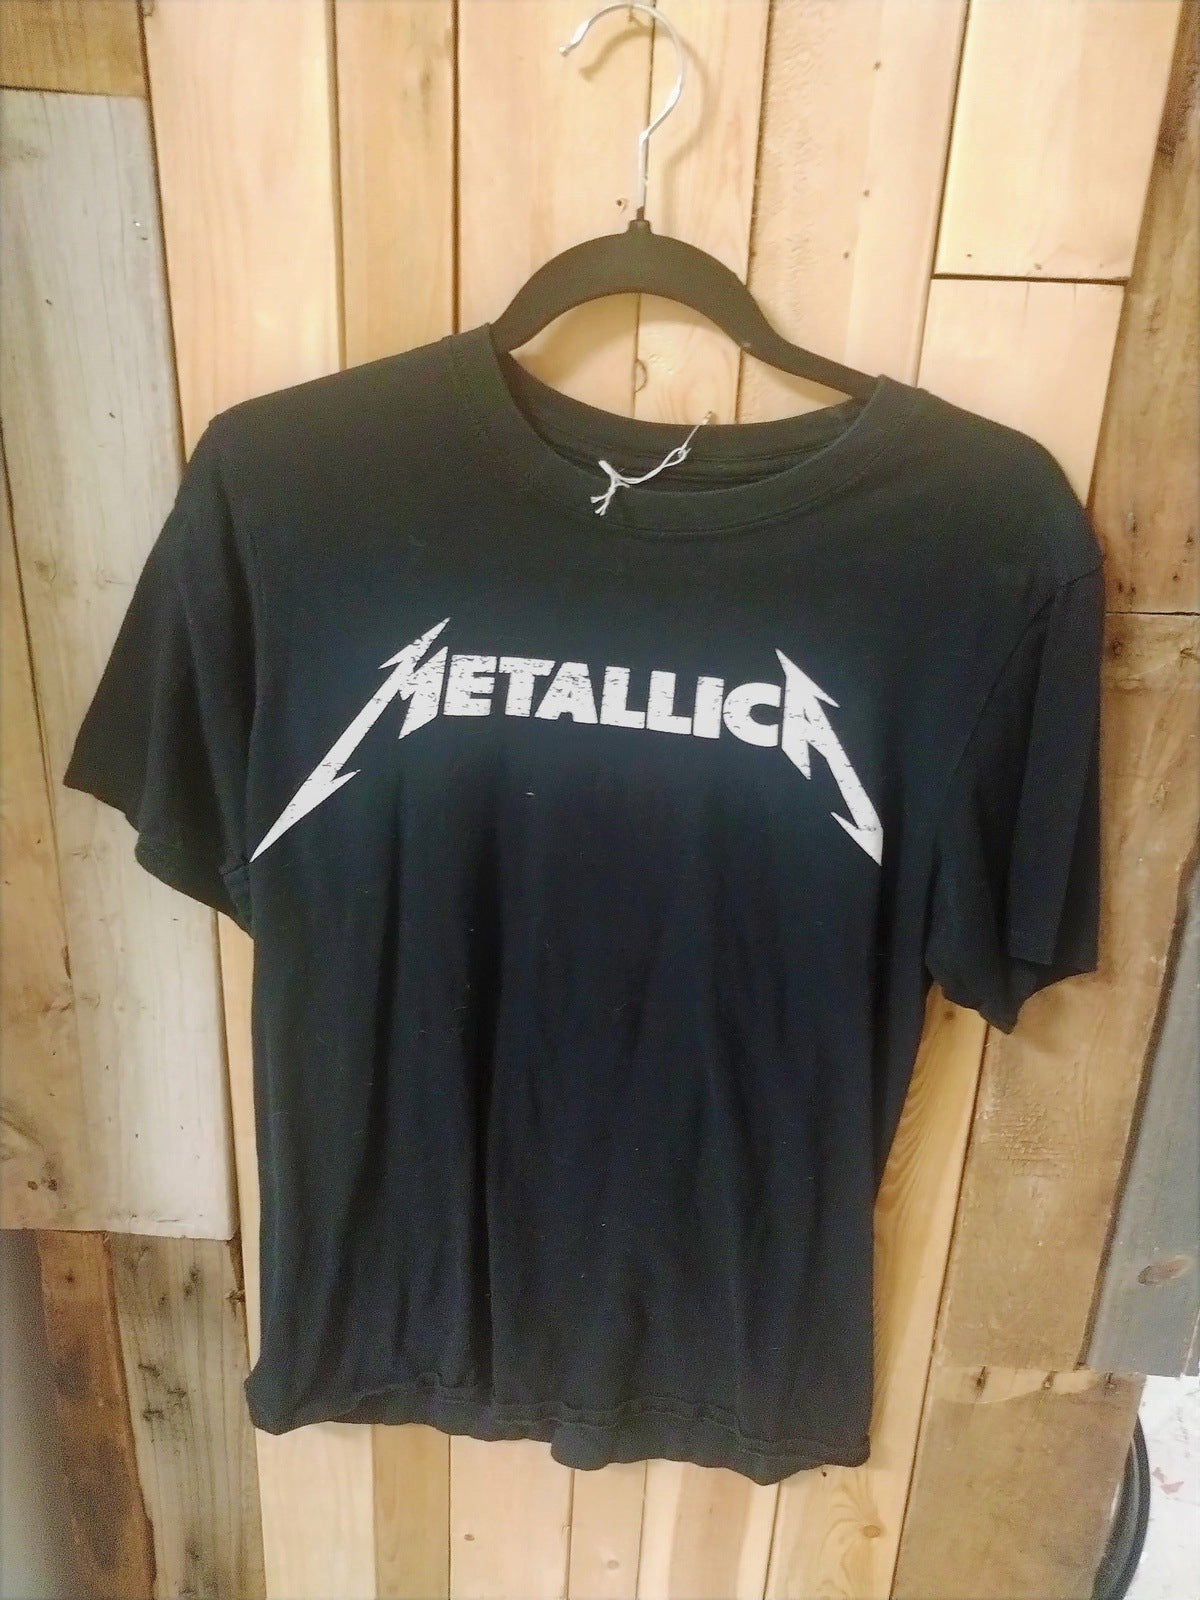 Metallica Tee Shirt Size Medium